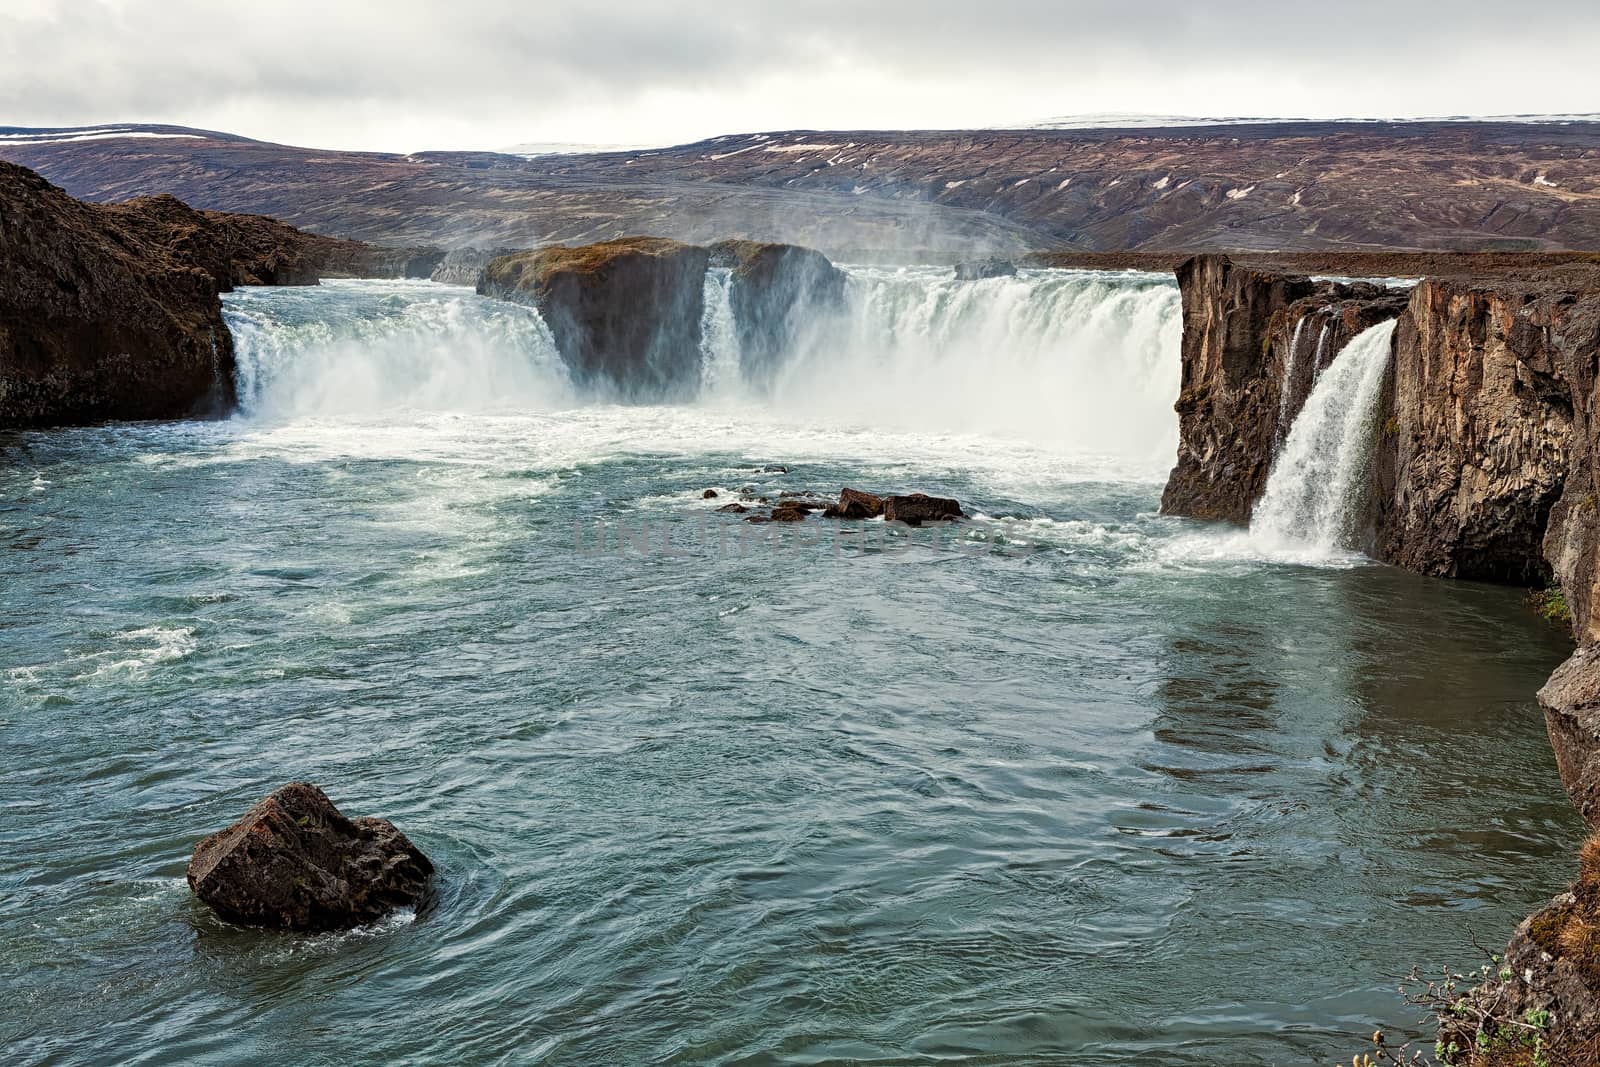 View of Godafoss waterfall, Iceland by LuigiMorbidelli